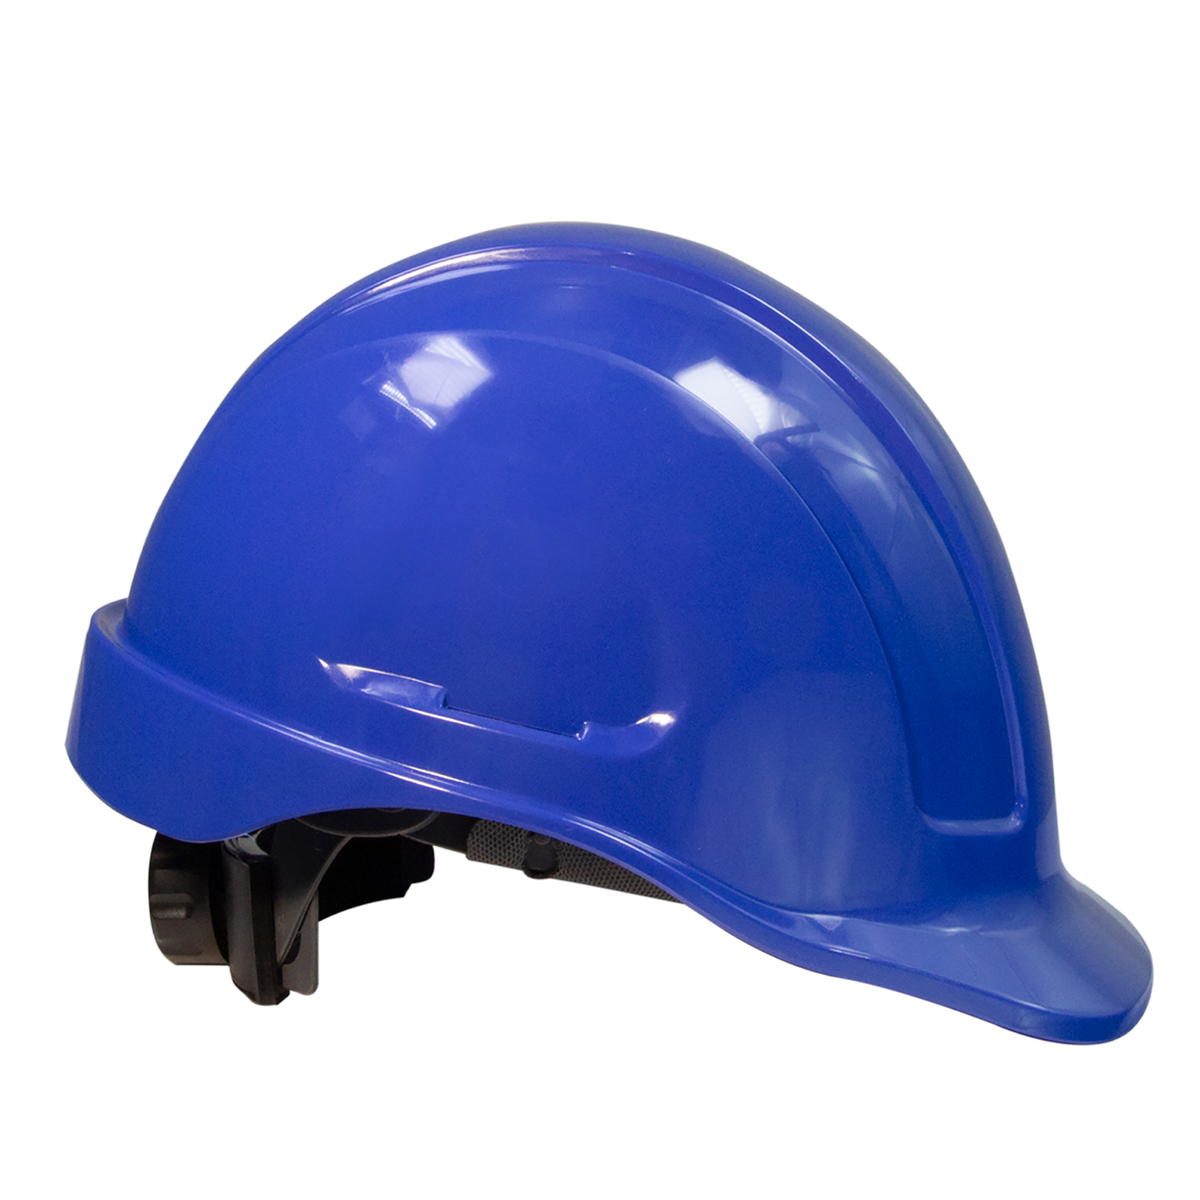 BIUDECO 1pc Blue Hard Hat Safety Face Cover Full Face Visor